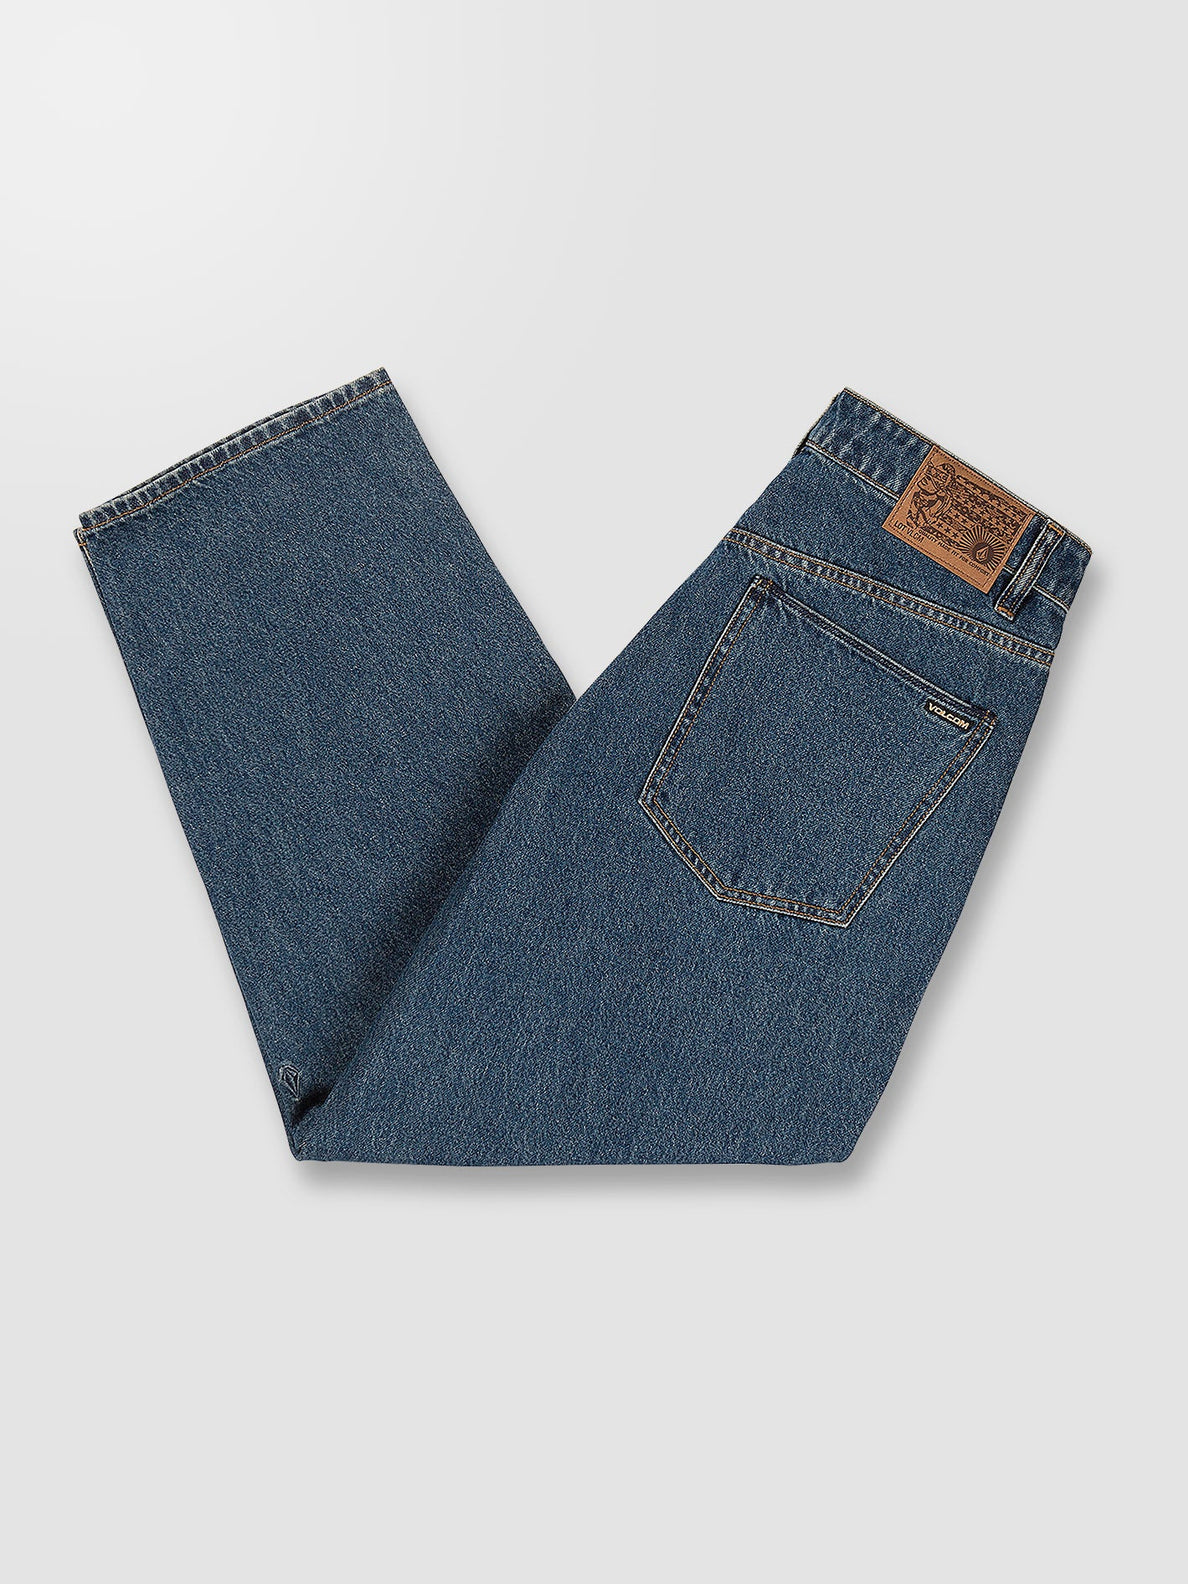 Billow Tapered Jeans - INDIGO RIDGE WASH (A1932200_IRW) [11]